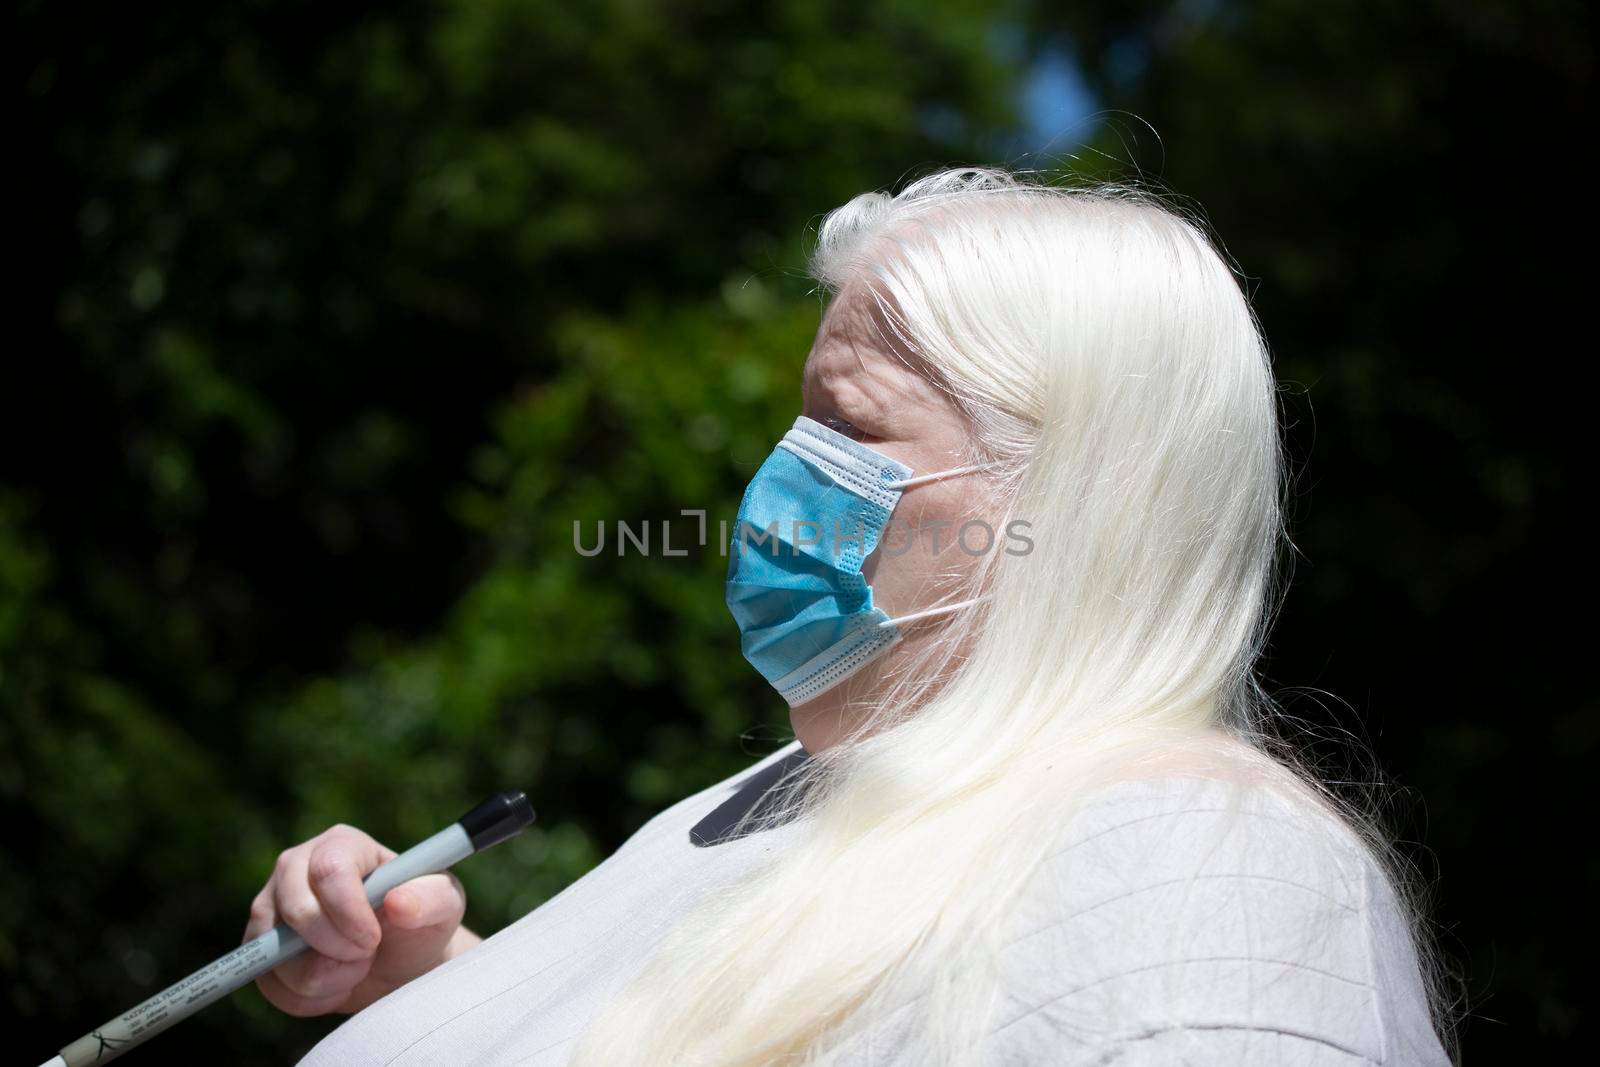 Albino Woman Wearing a Mask by tornado98